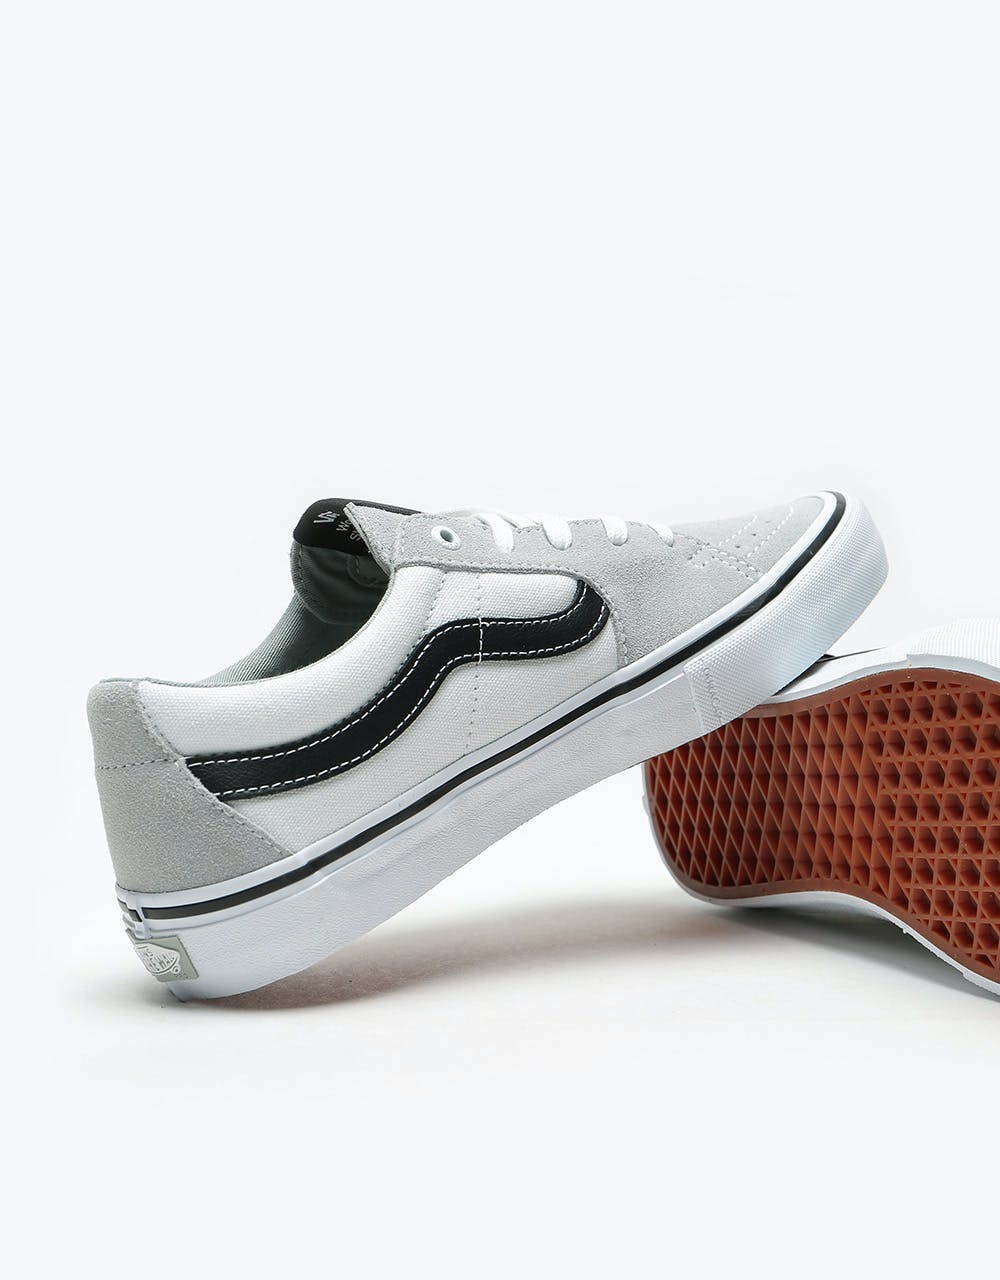 Vans Sk8-Low Pro Skate Shoes - Mirage/White